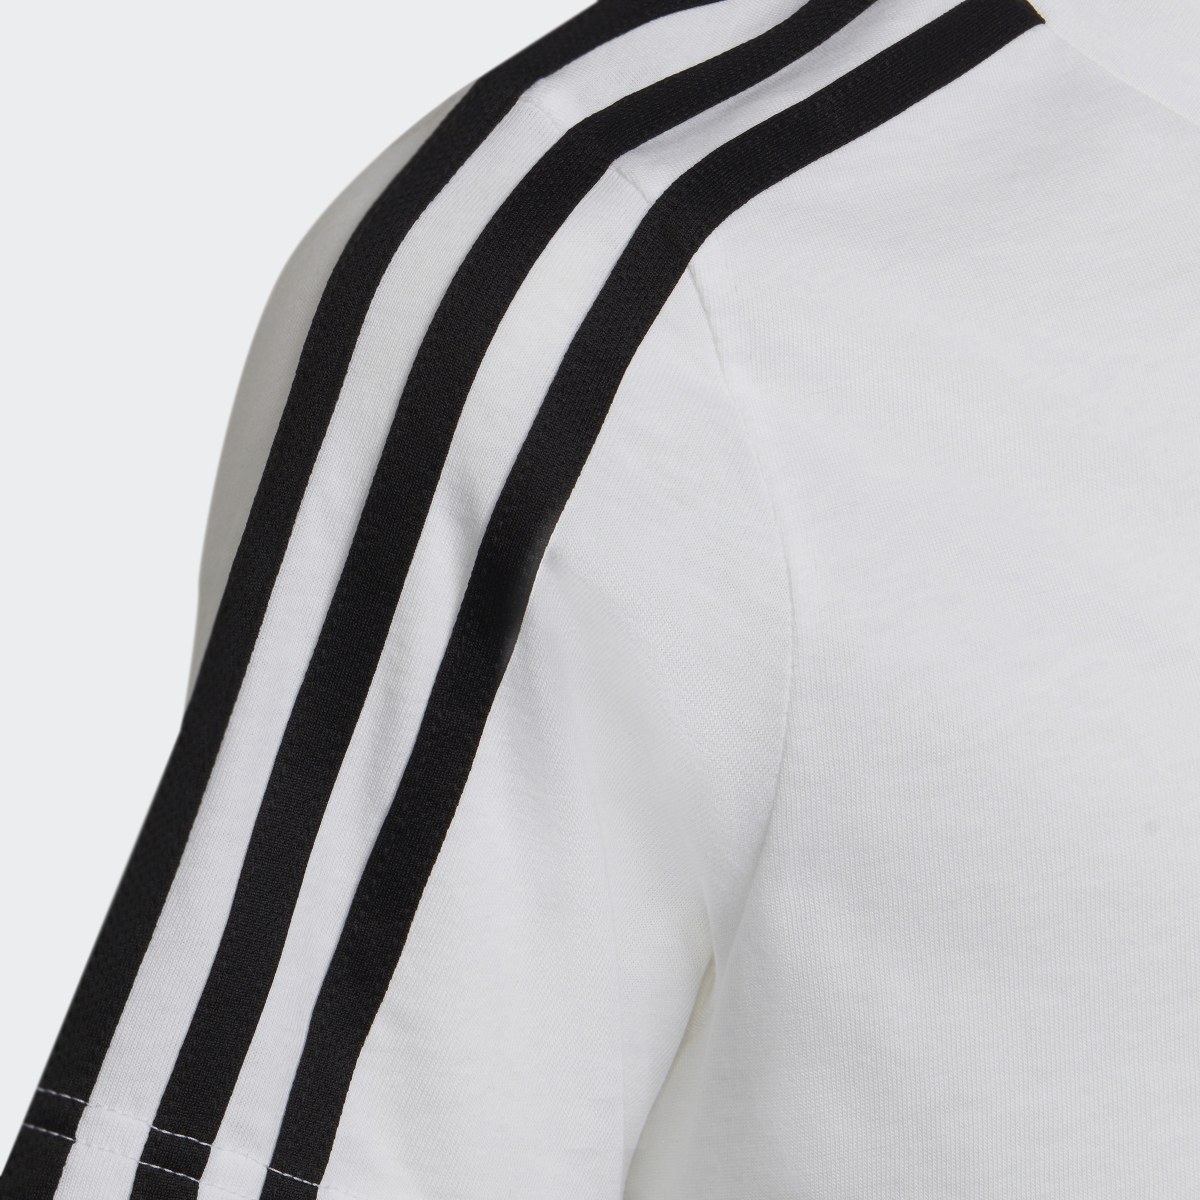 Adidas Essentials 3-Stripes T-Shirt. 4